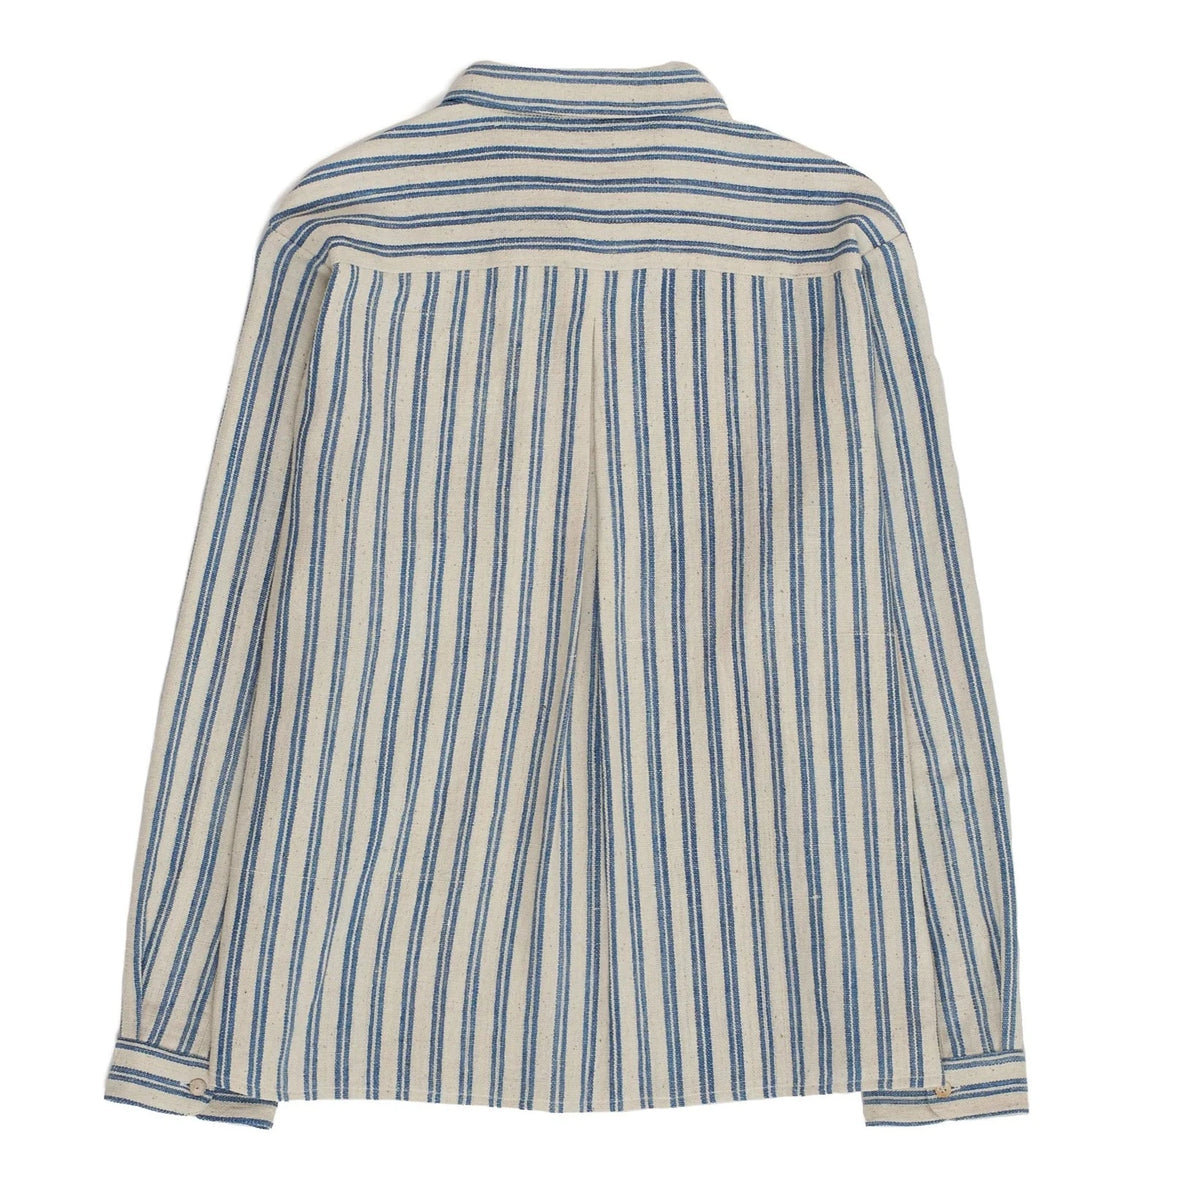 Natural indigo Basic Stripe Cotton Shirt (Size Large)